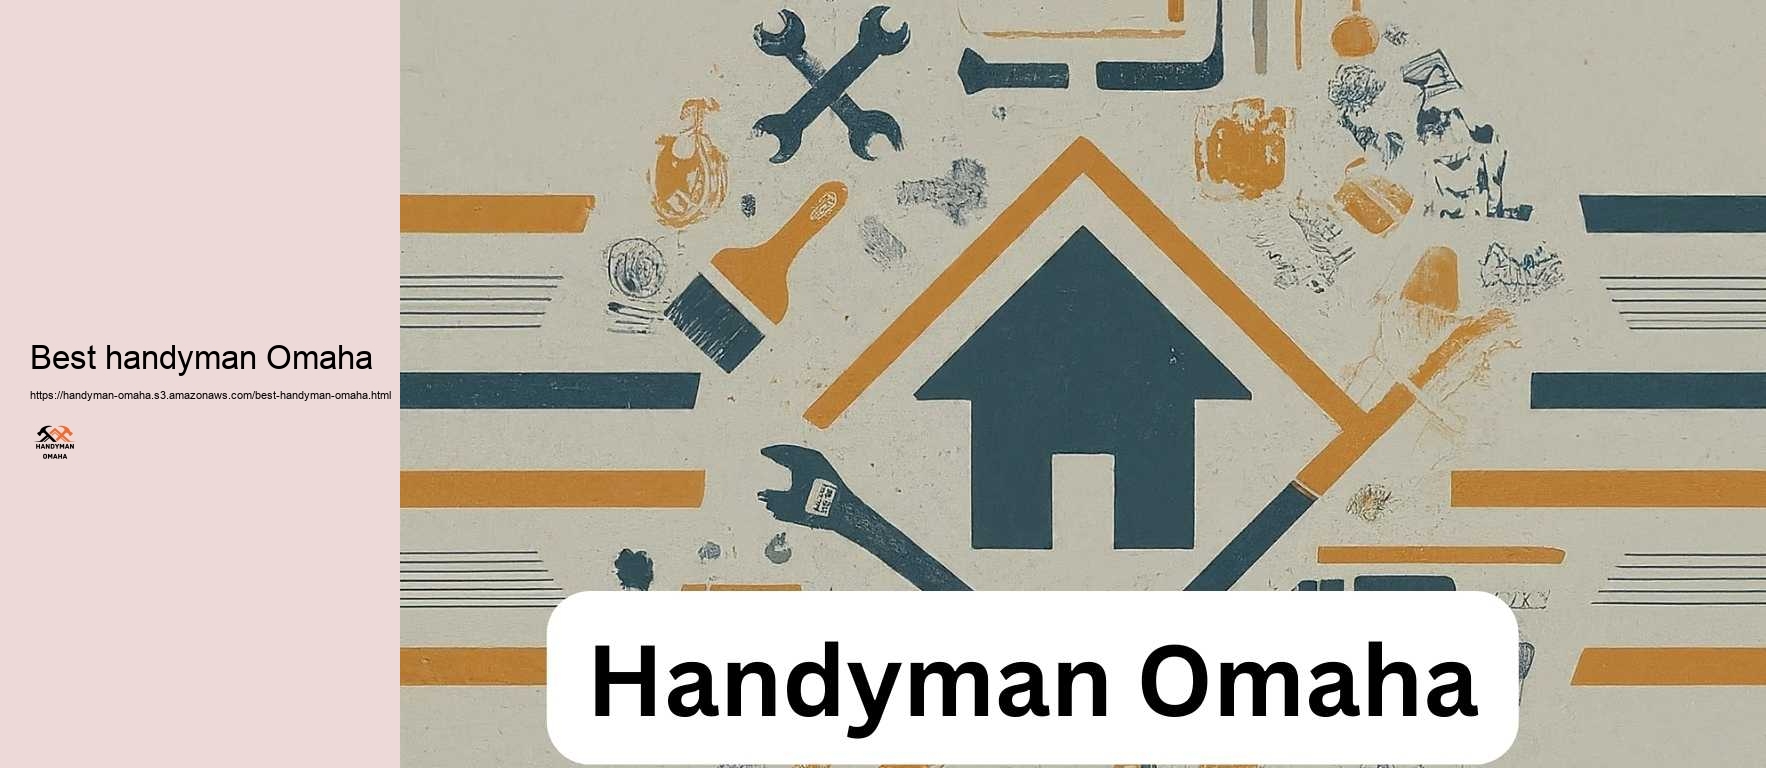 Best handyman Omaha